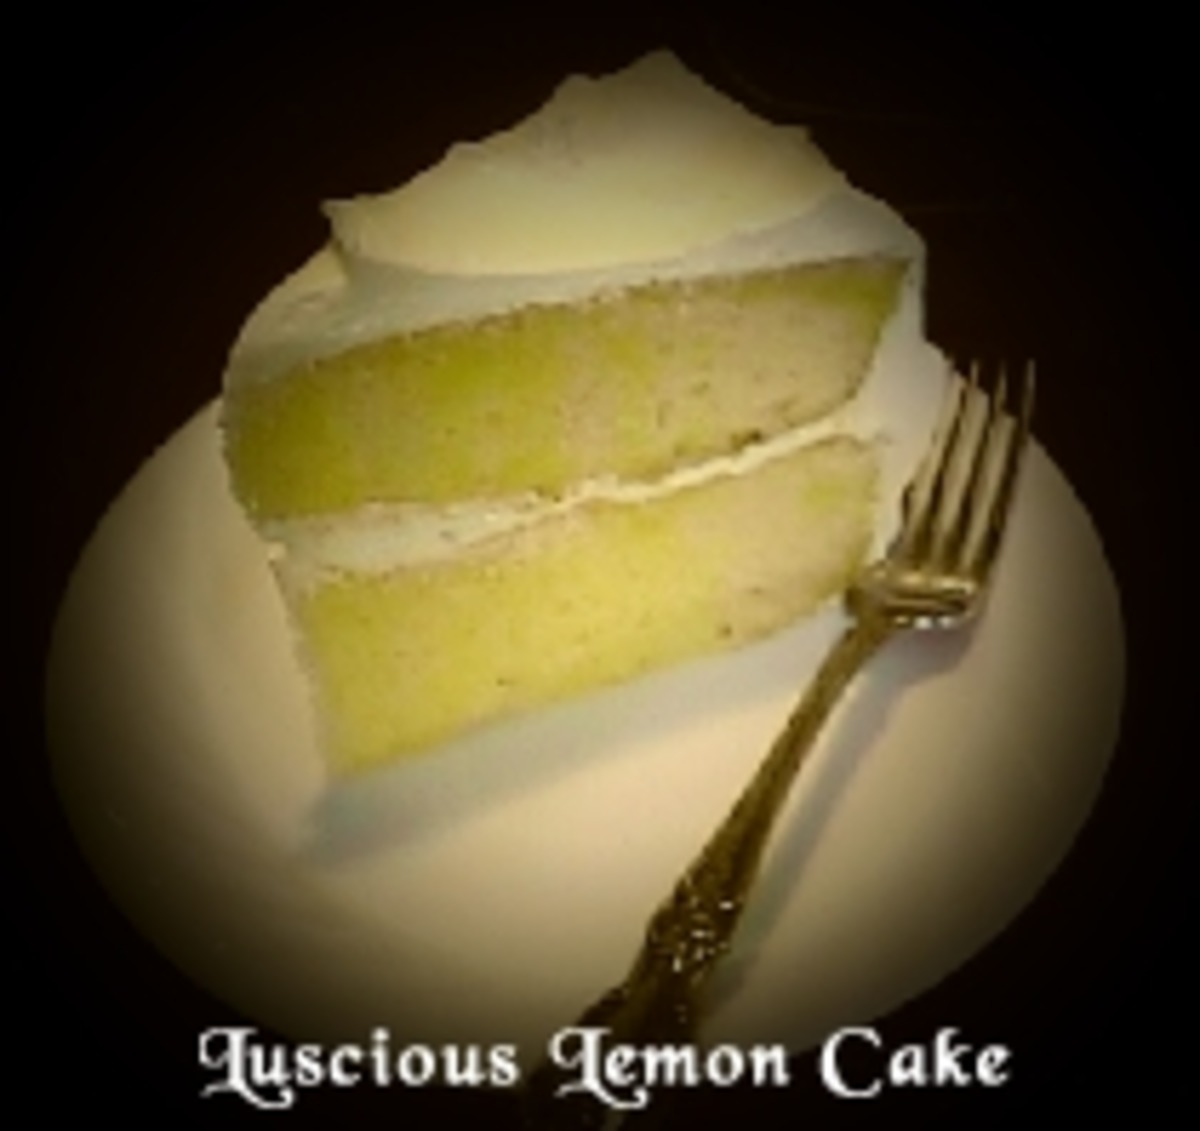 Genesee Depot's Union House shares luscious lemon mousse cake recipe